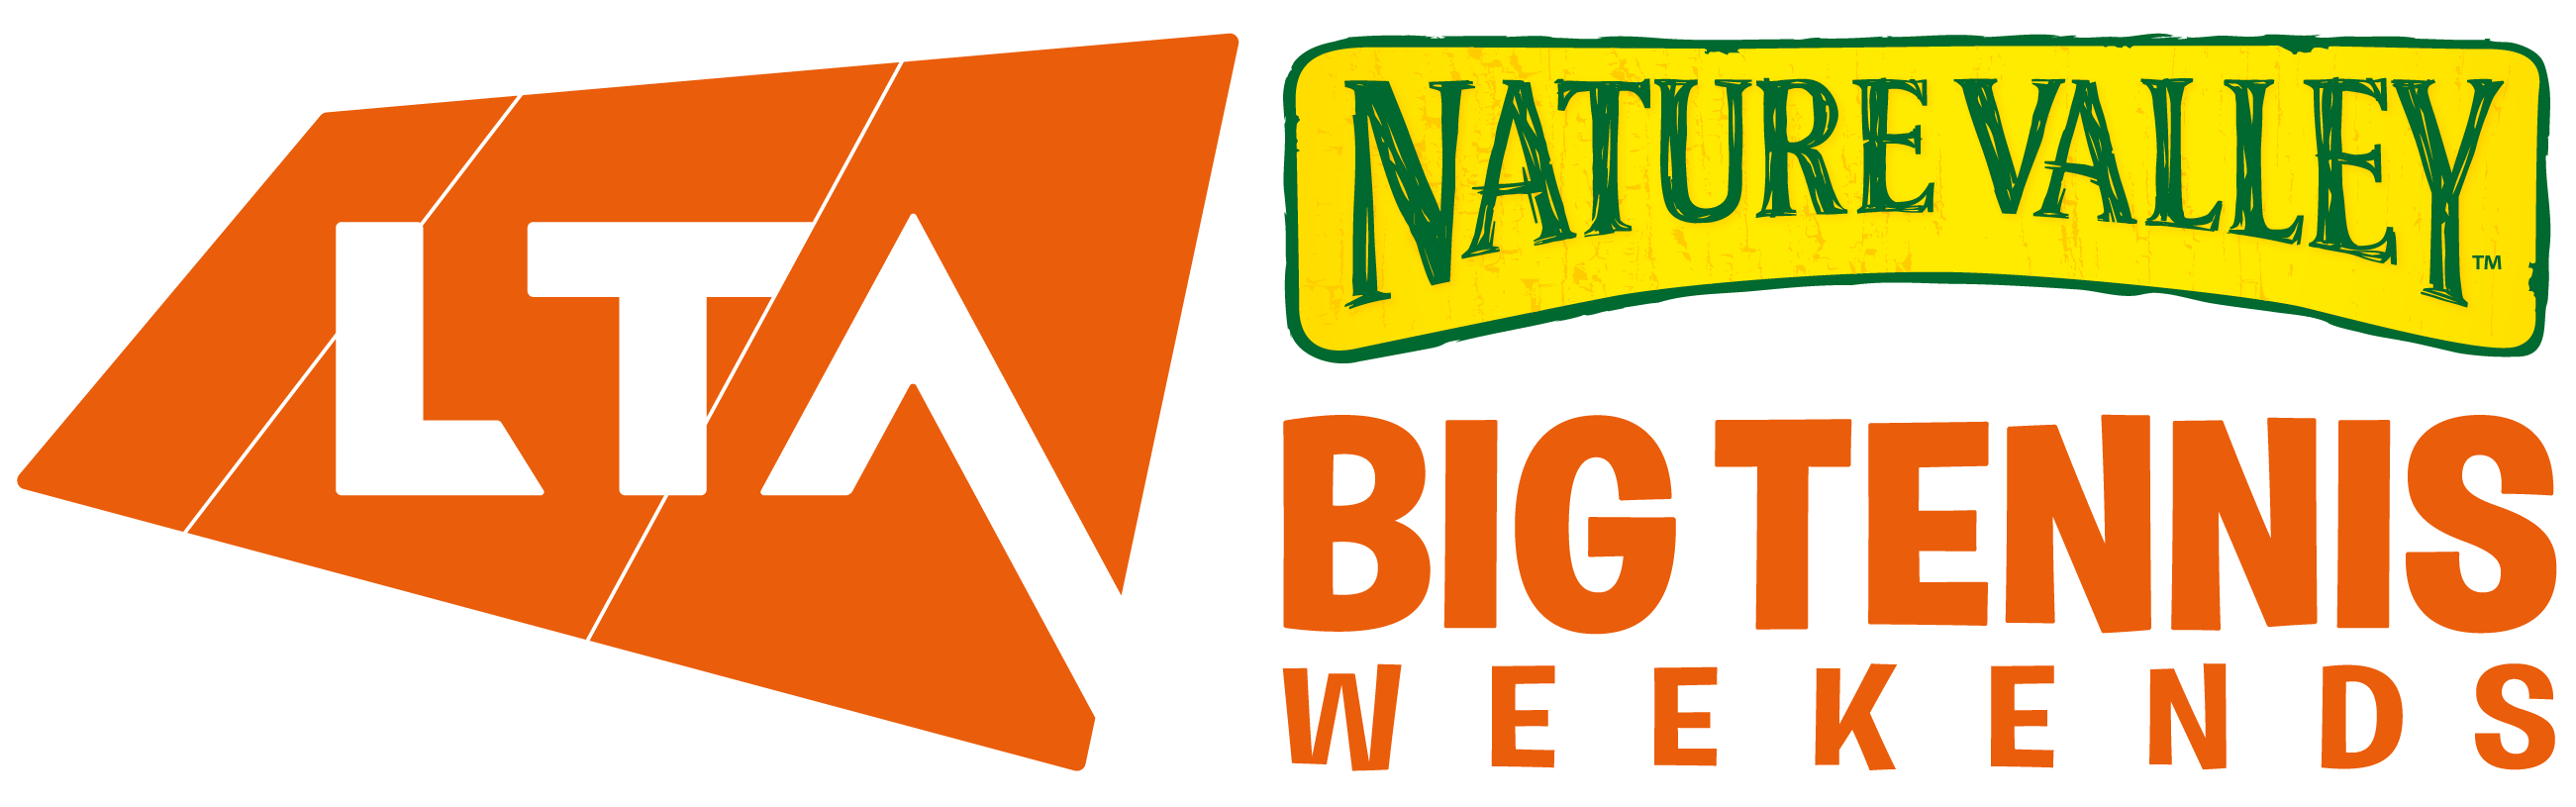 Nature Valley Big Tennis Weekends logo